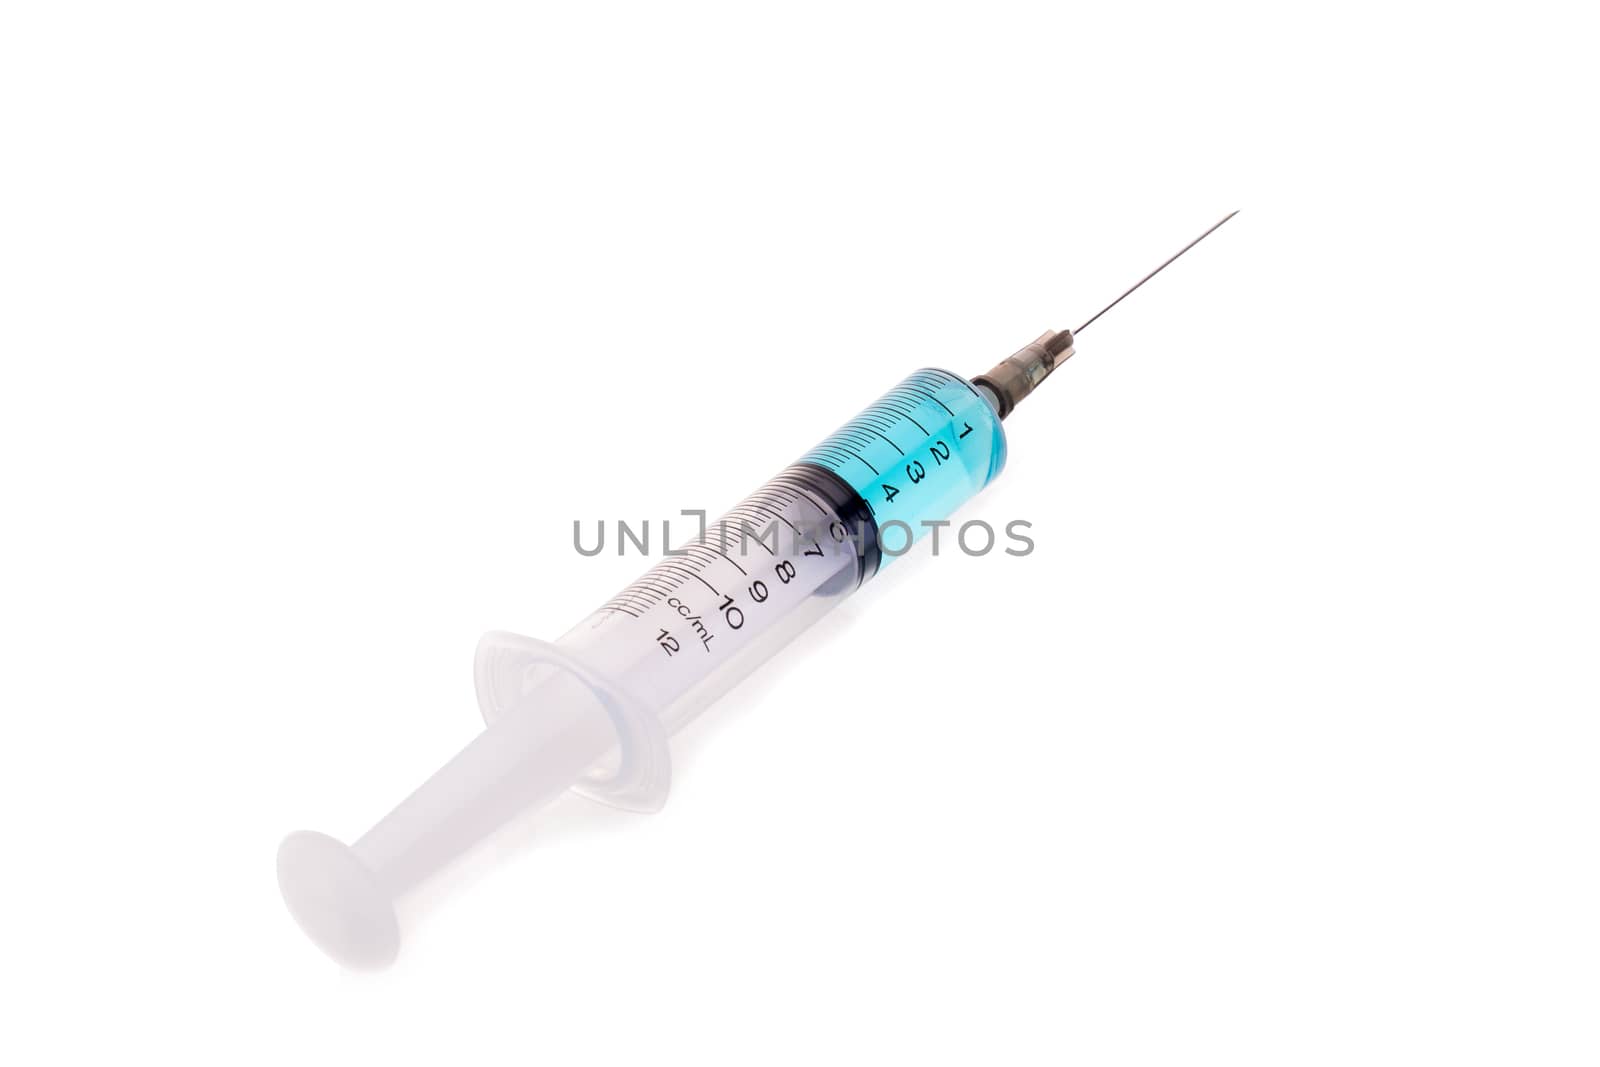 pills and plastic medical syringe on a white background.